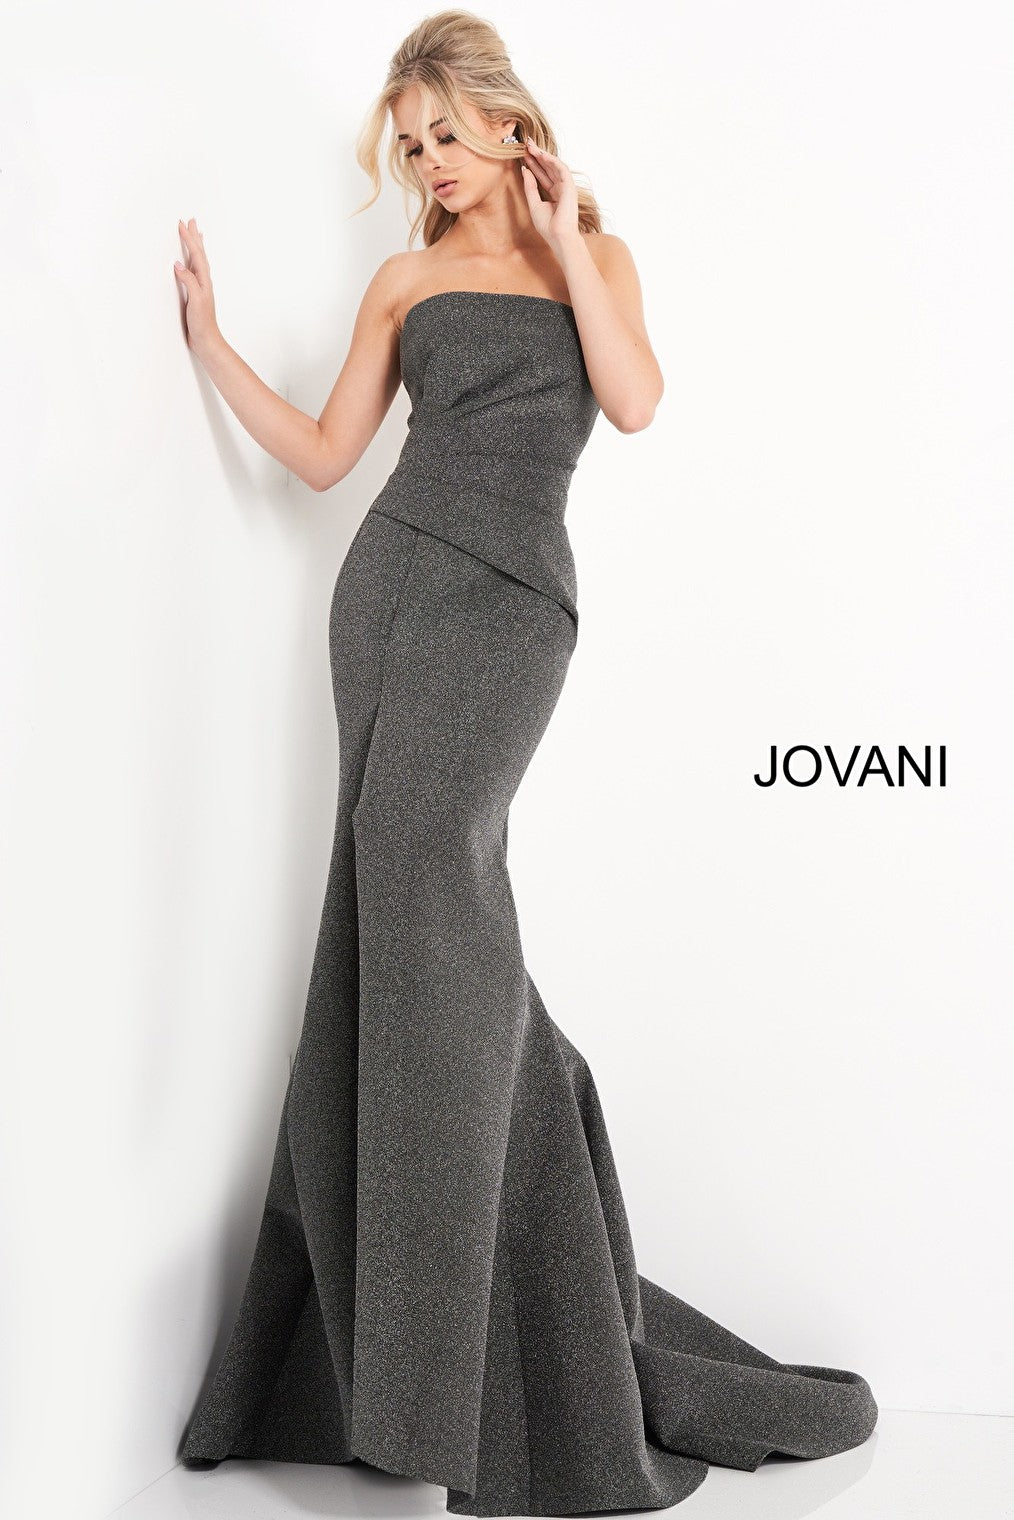 Black silver scuba Jovani evening dress 05490